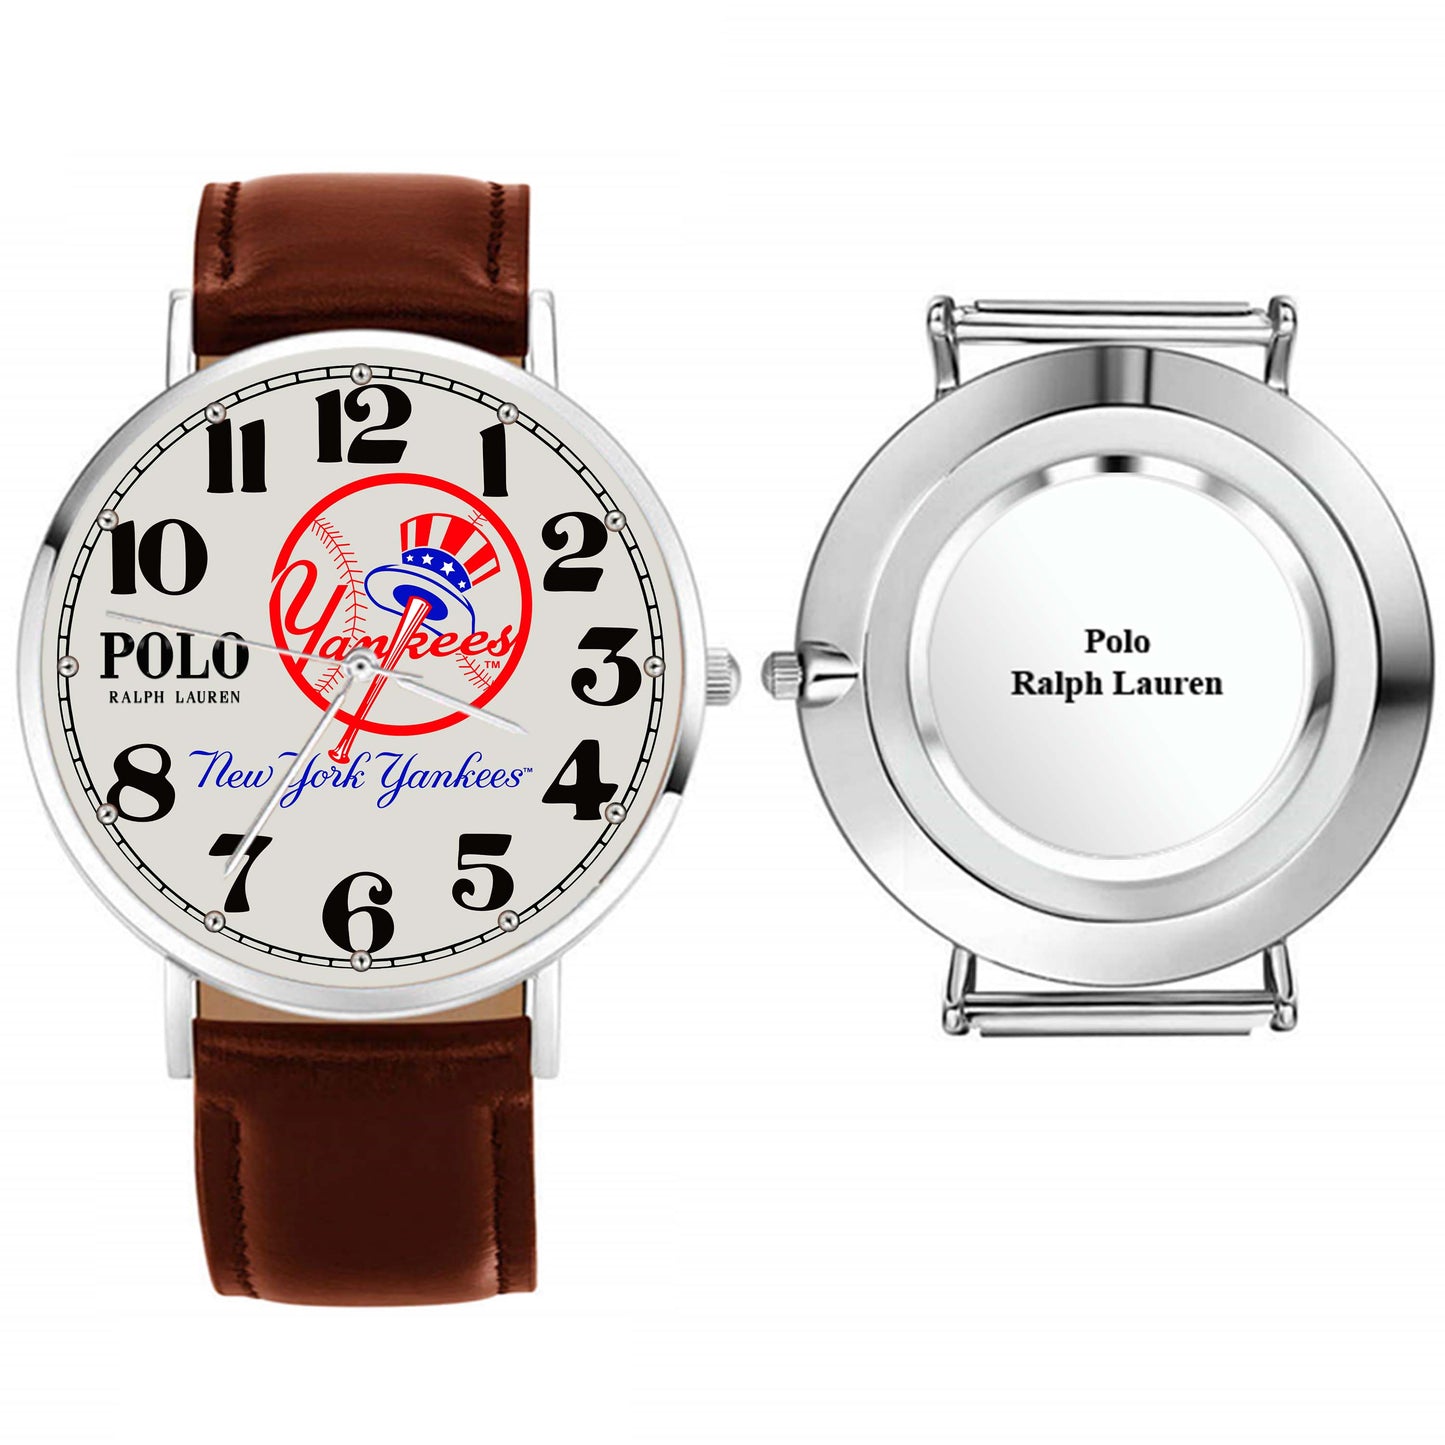 Polo Ralph Lauren New York Yankees Sport Metal Watch Nm29.8